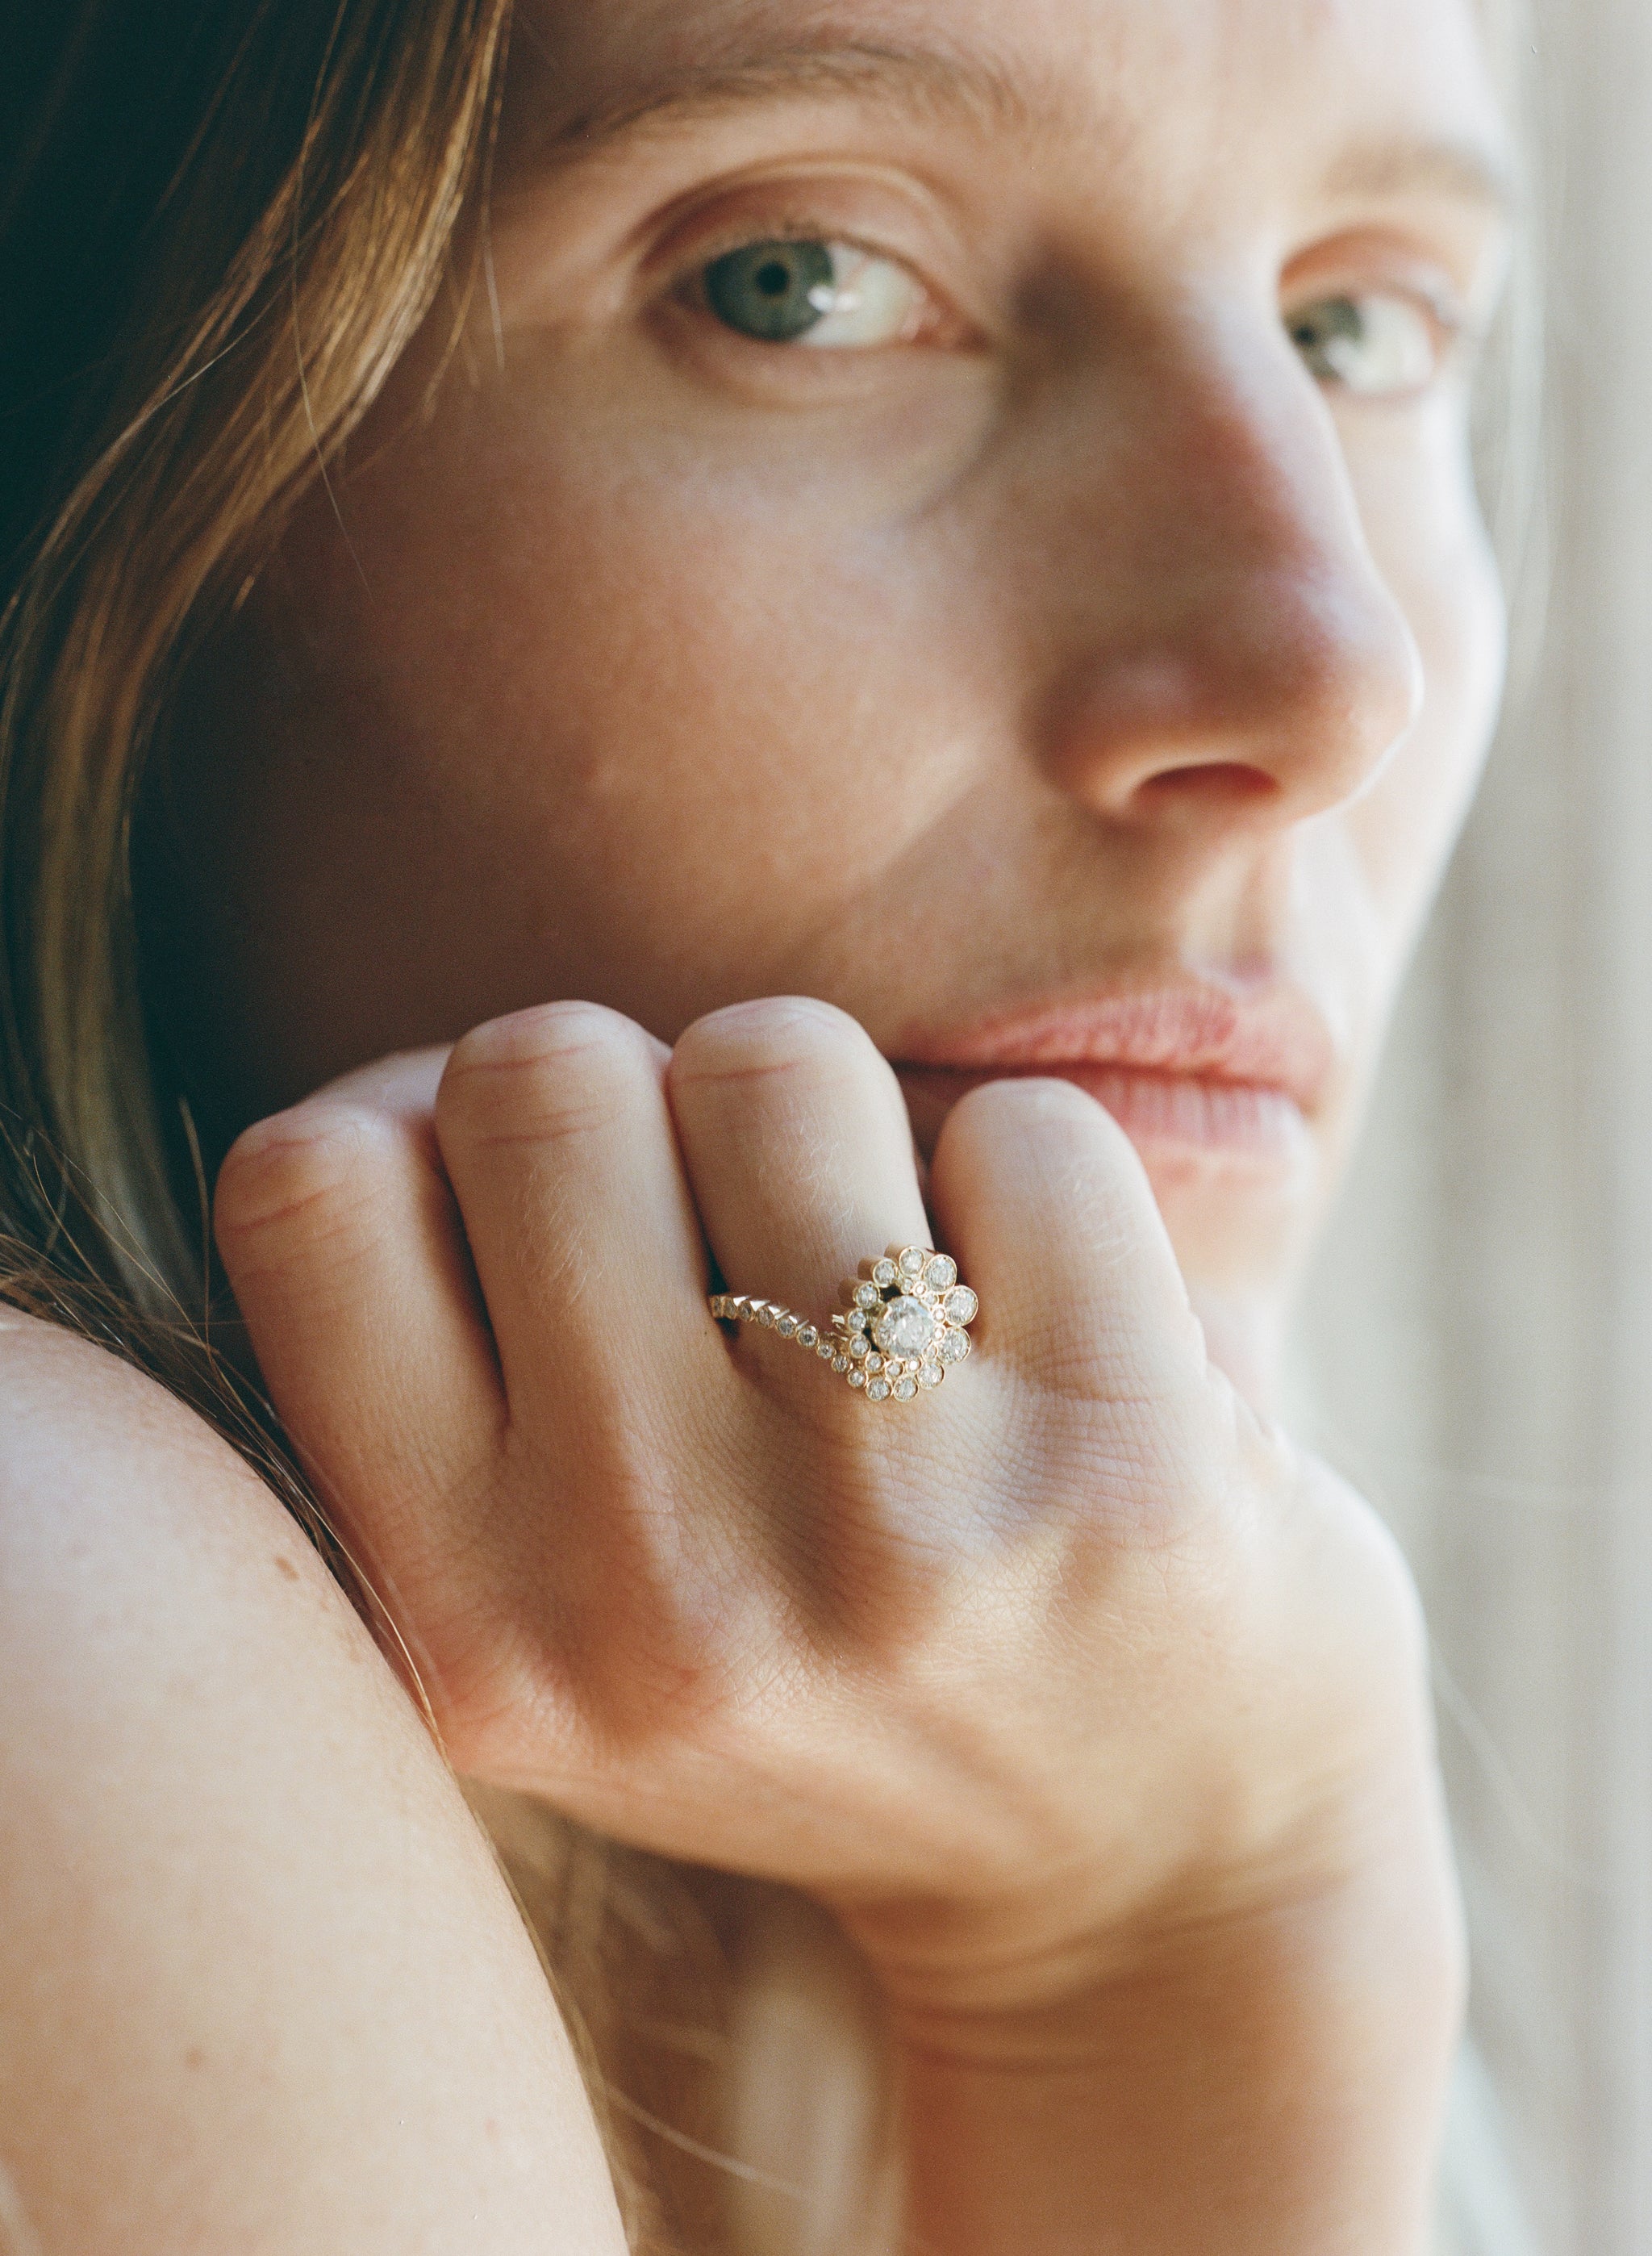 Dree Hemingway wearing Plateau diamond ring.